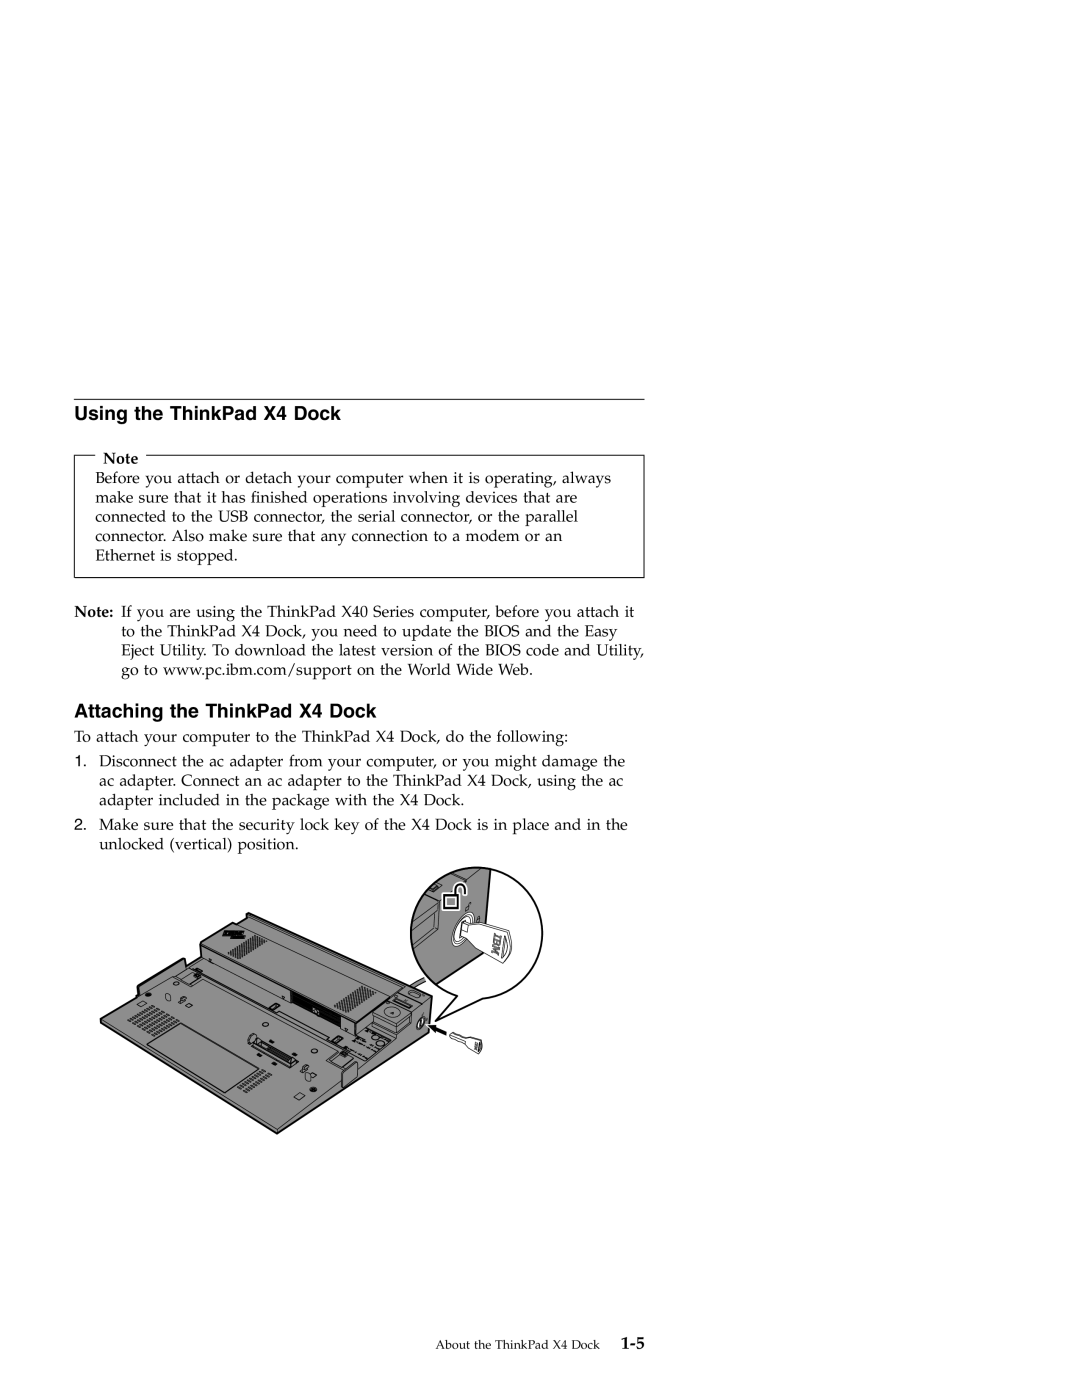 IBM manual Using the ThinkPad X4 Dock, Attaching the ThinkPad X4 Dock 